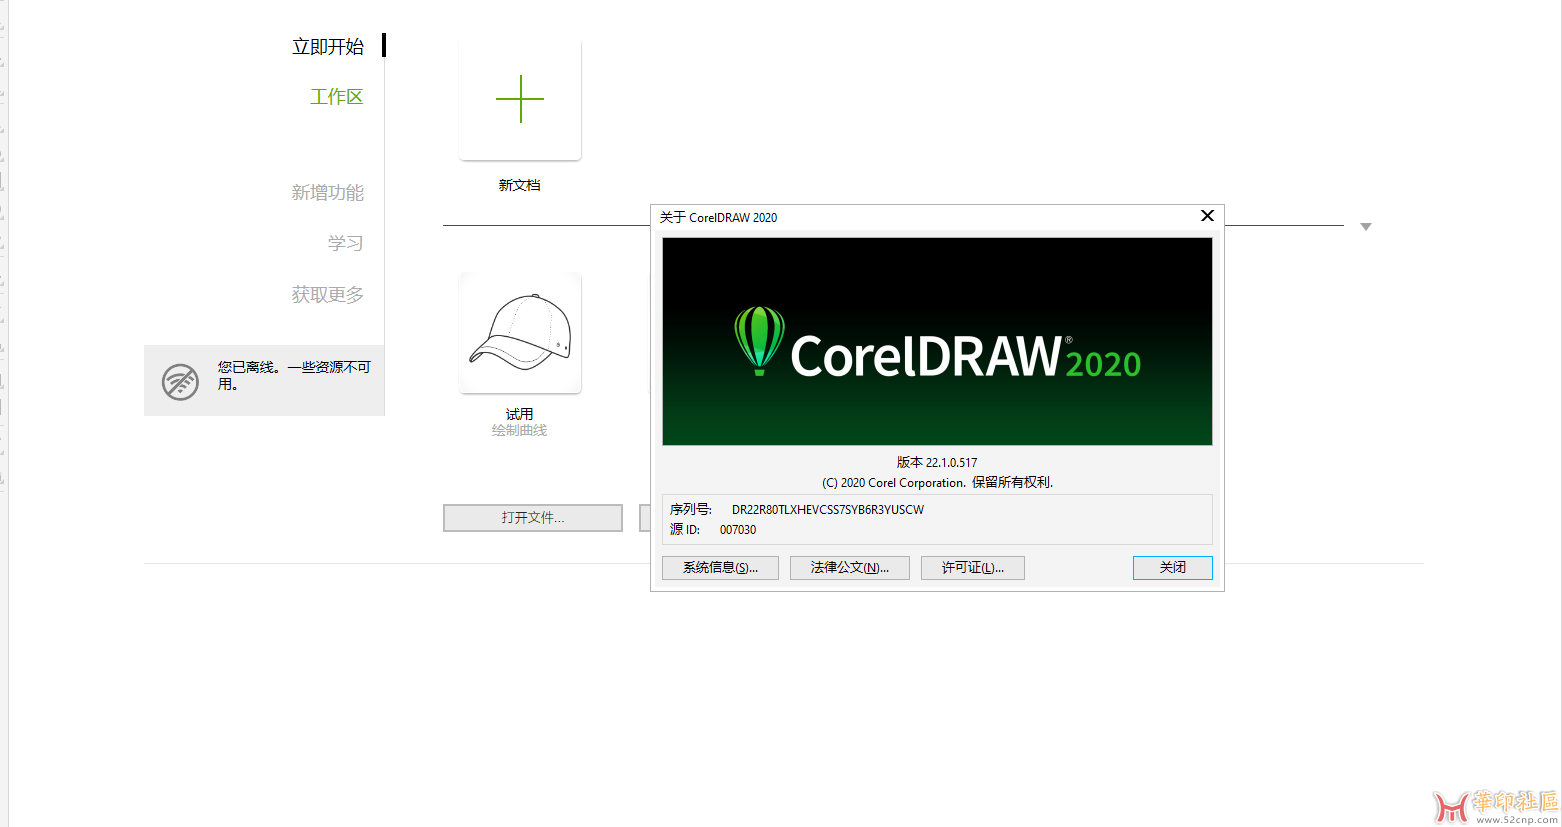 CorelDRAW 2020 86位直装版本{tag}(3)